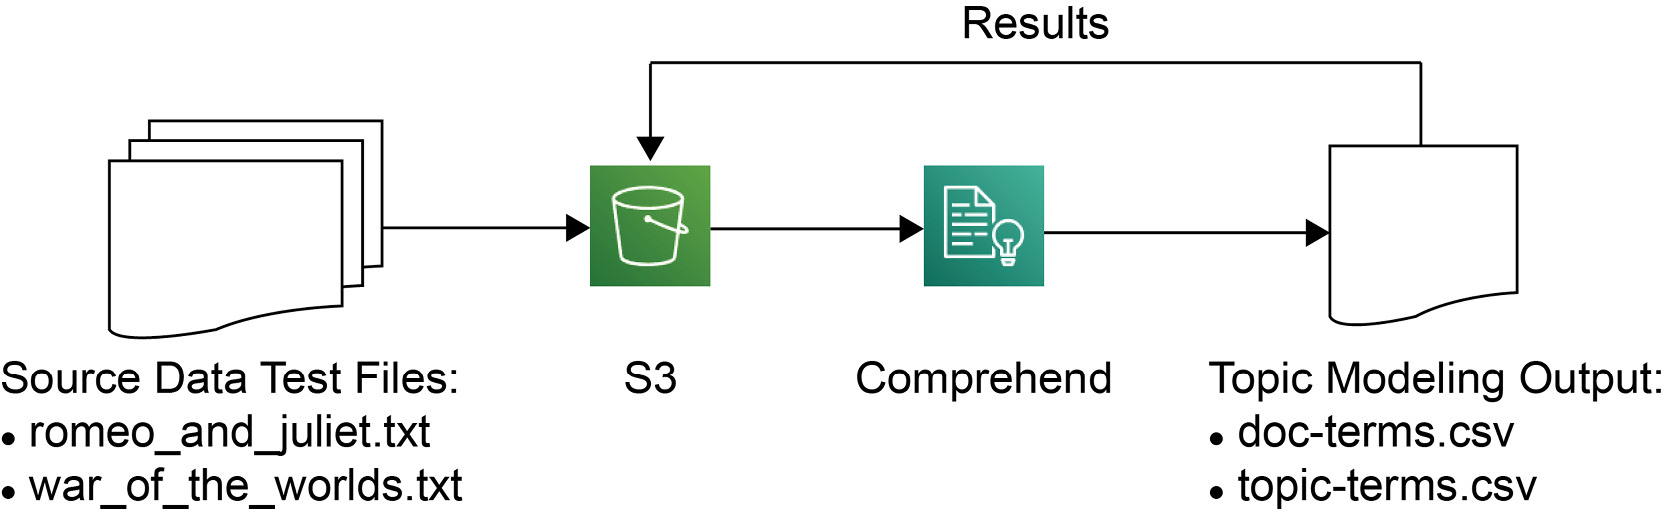 Figure 3.5: Data pipeline architecture overview
